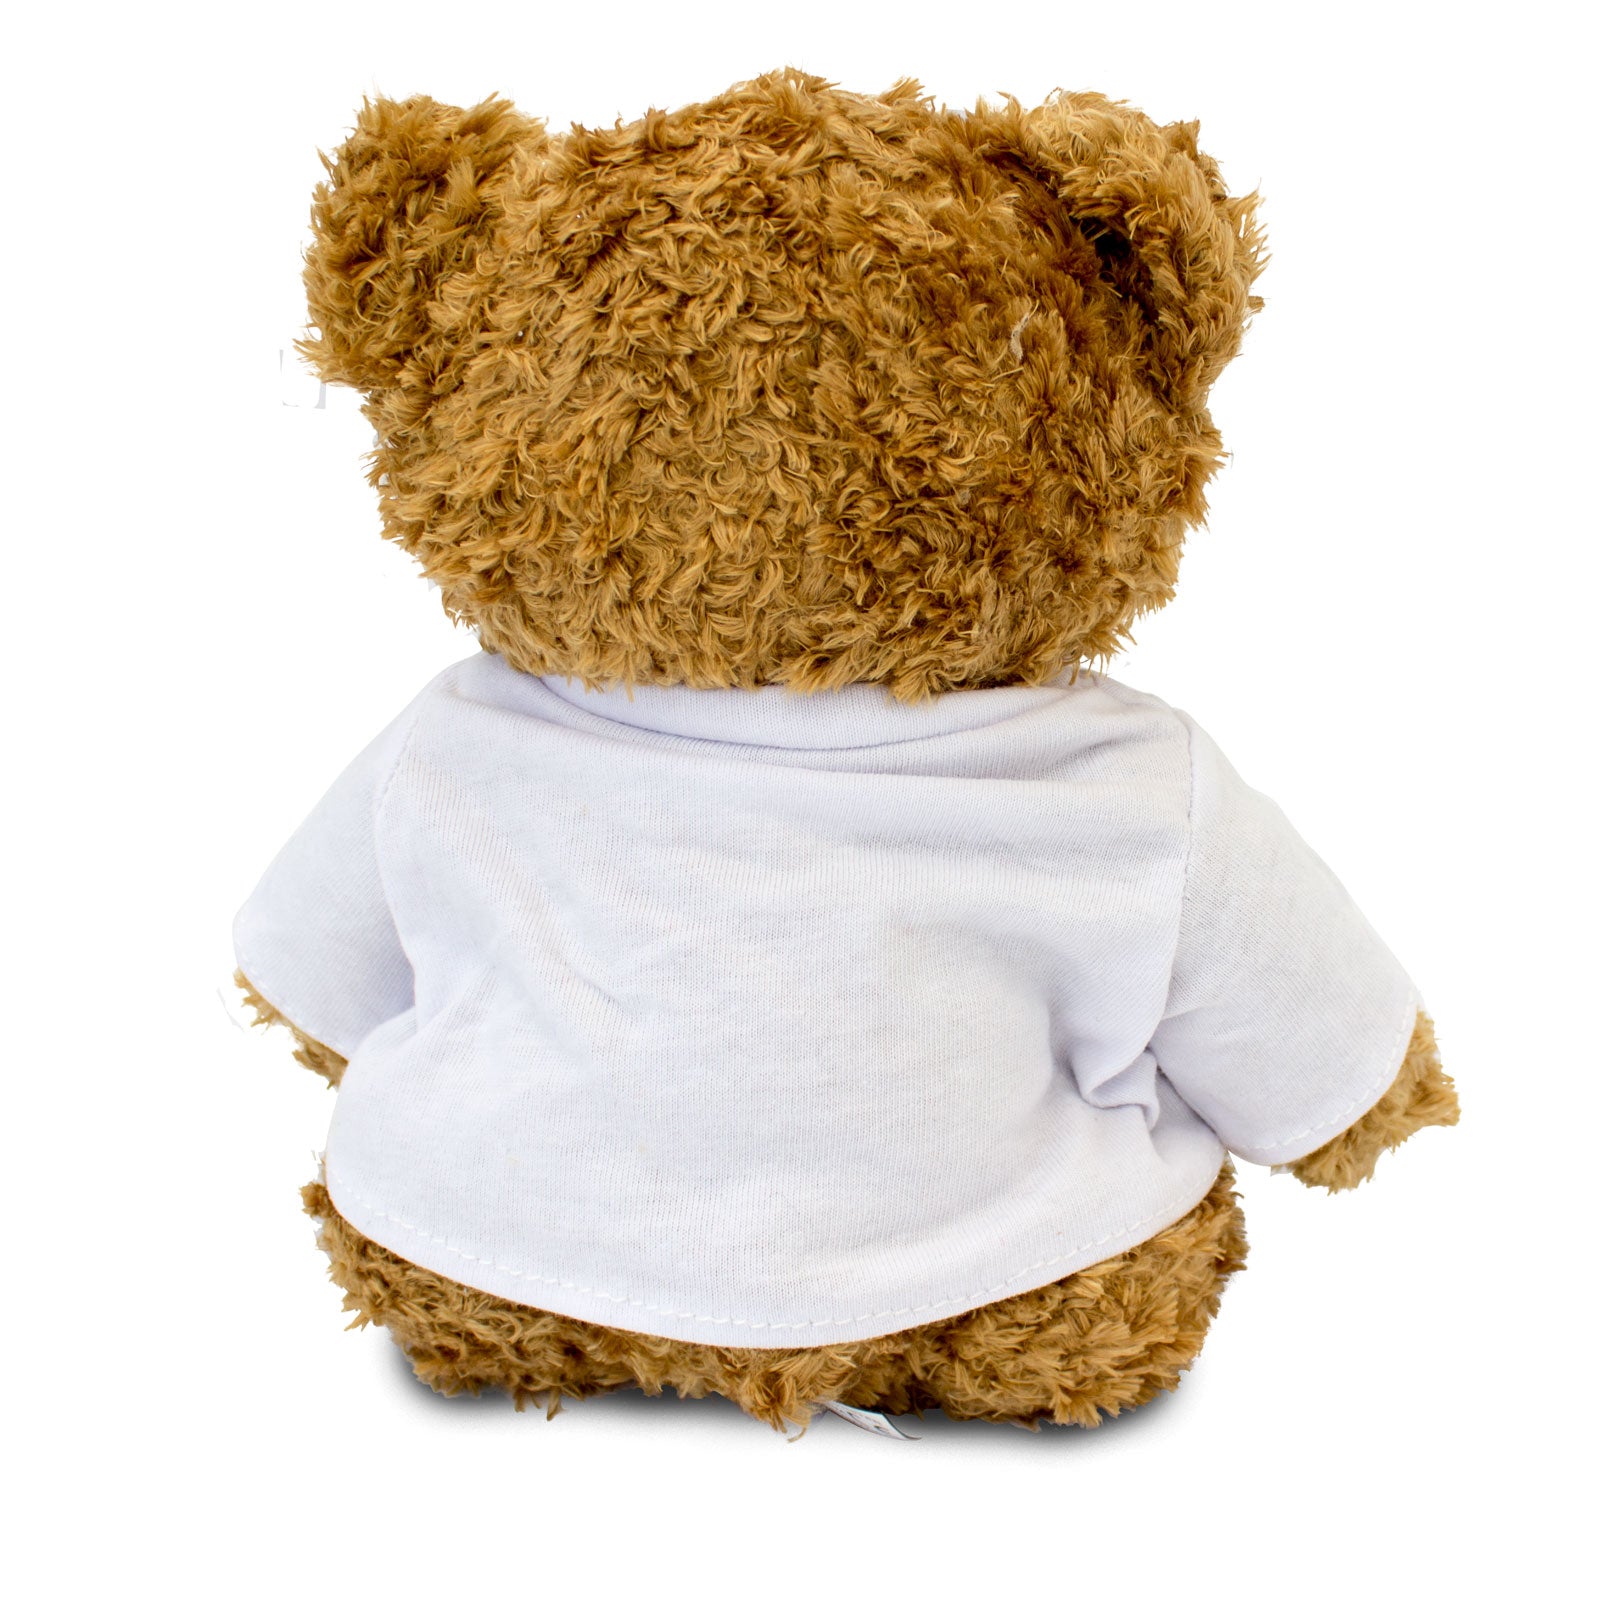 Get Well Soon Artemis - Teddy Bear